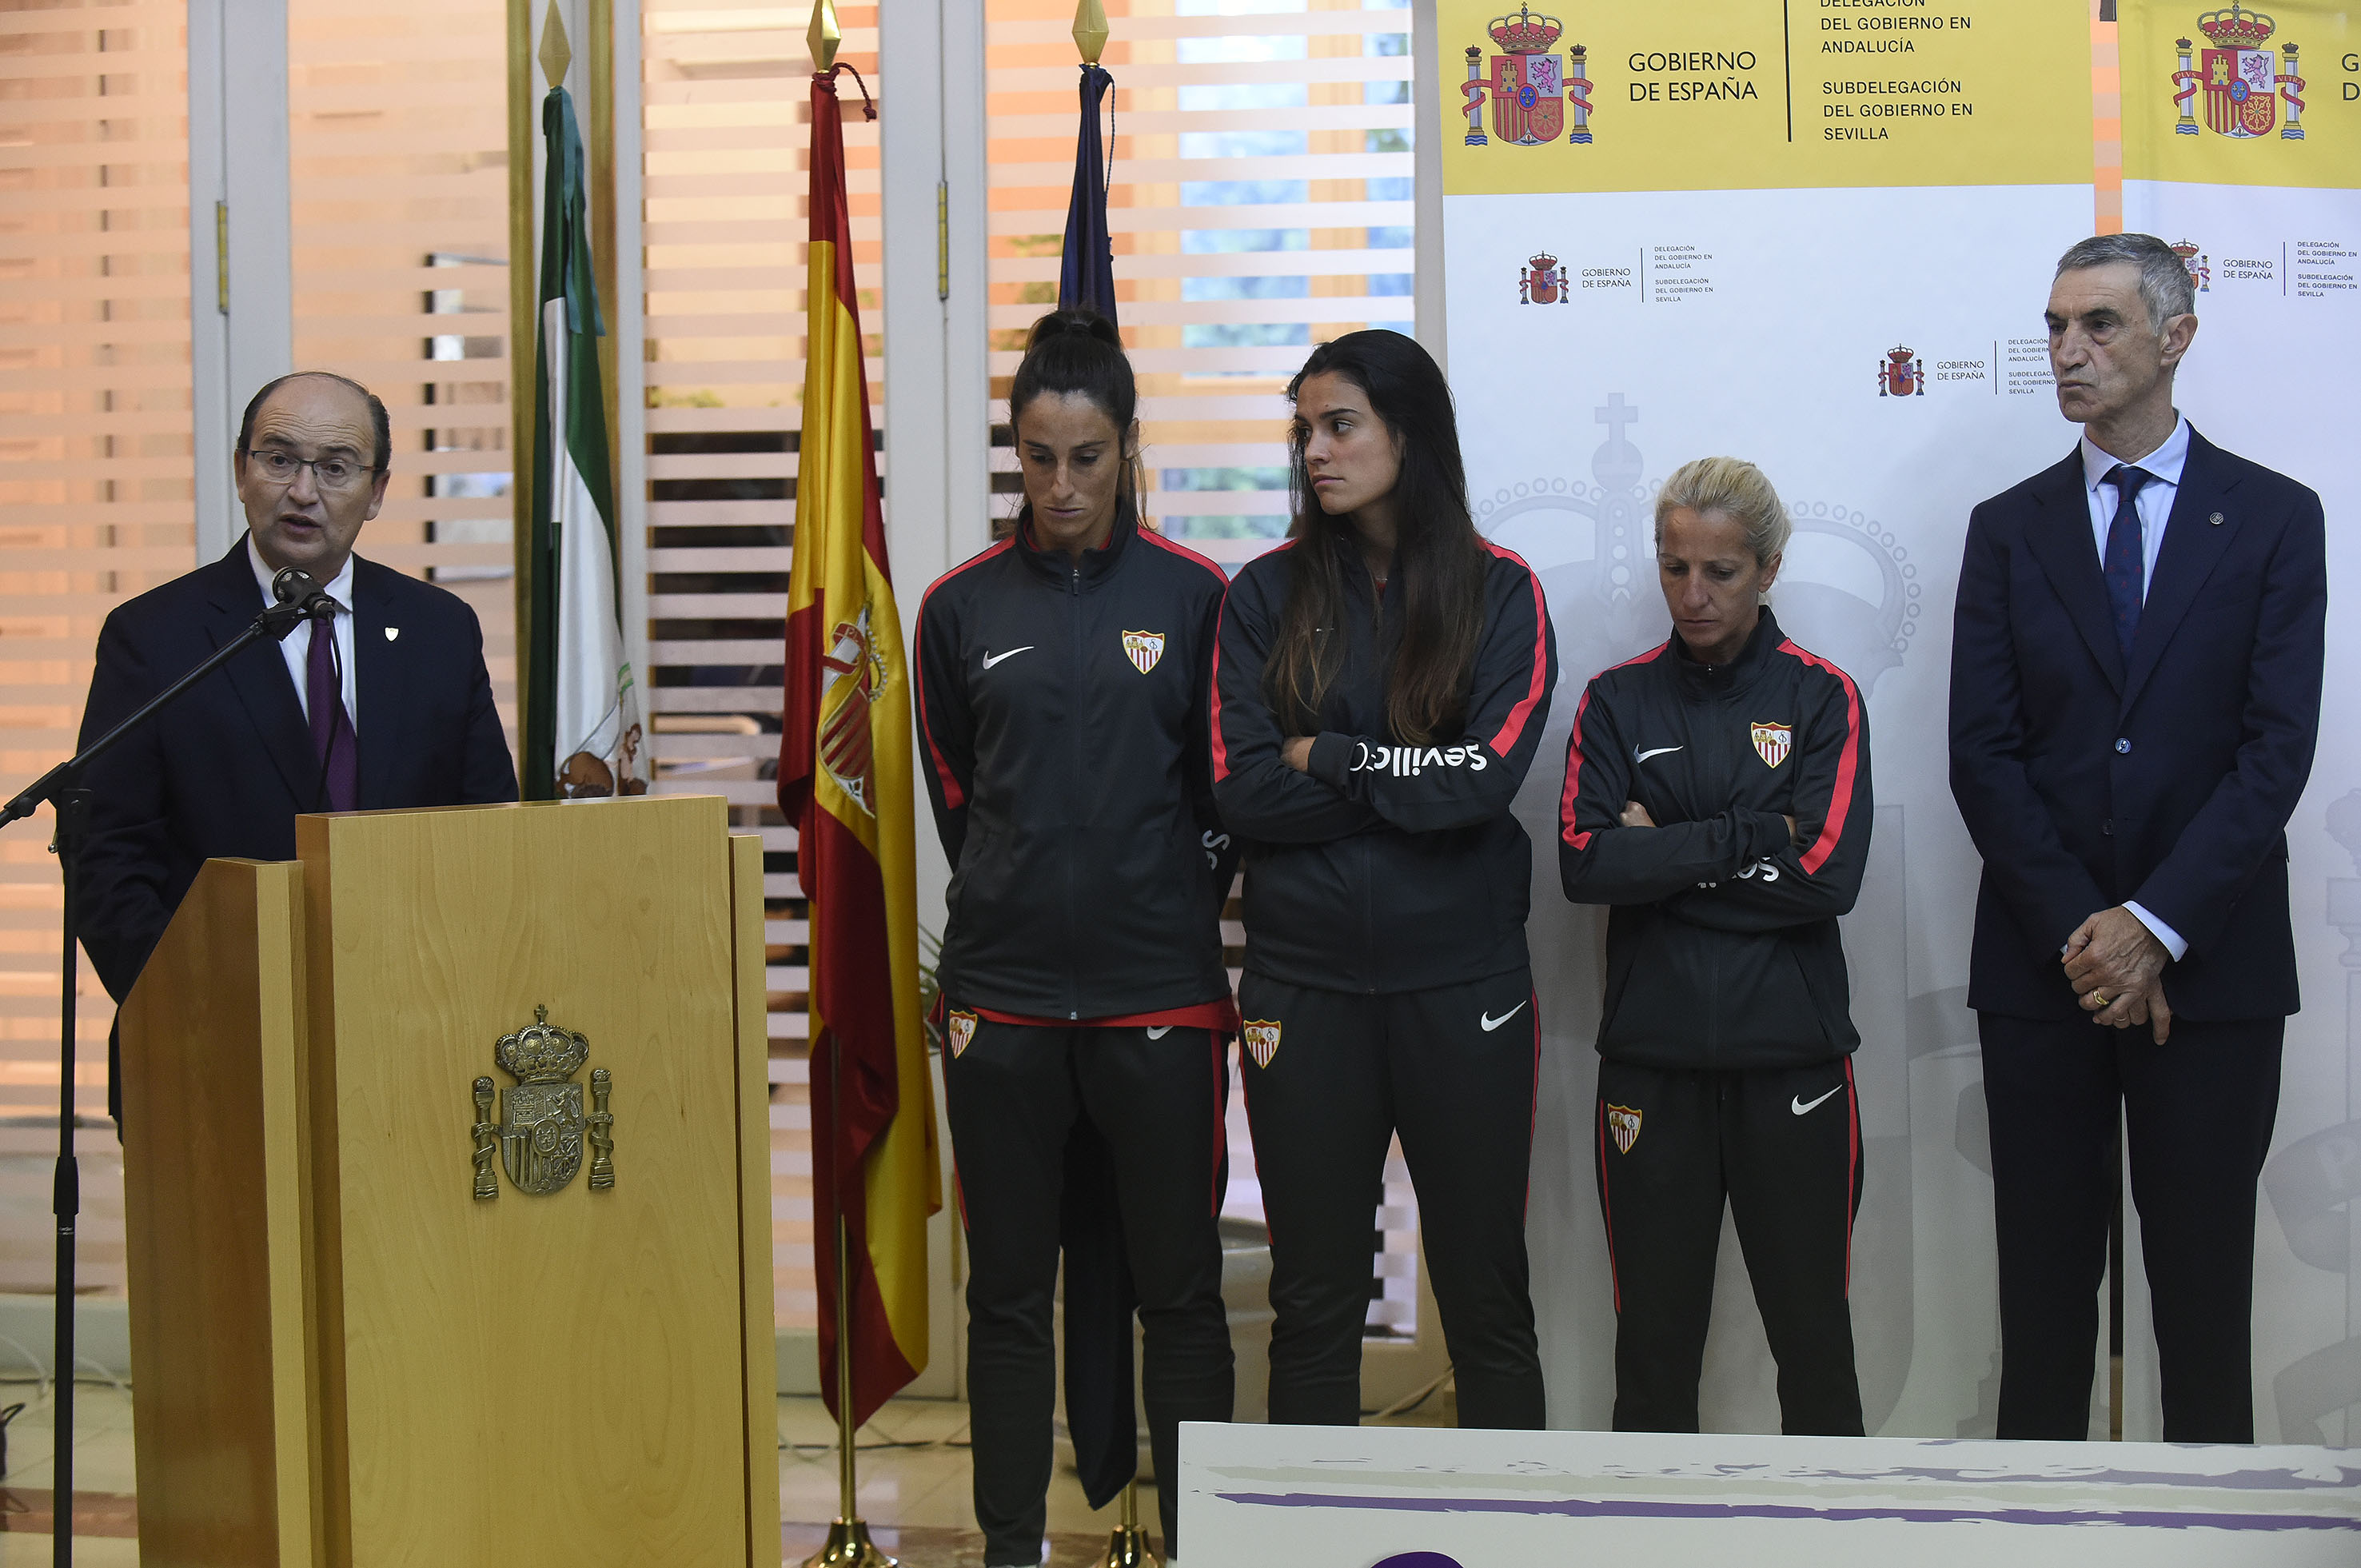 The president, José Castro, accompanied by Maite Albarrán, Marta Carrasco and Alicia Fuentes, captains of Sevilla FC Womens, and Antonio Álvarez